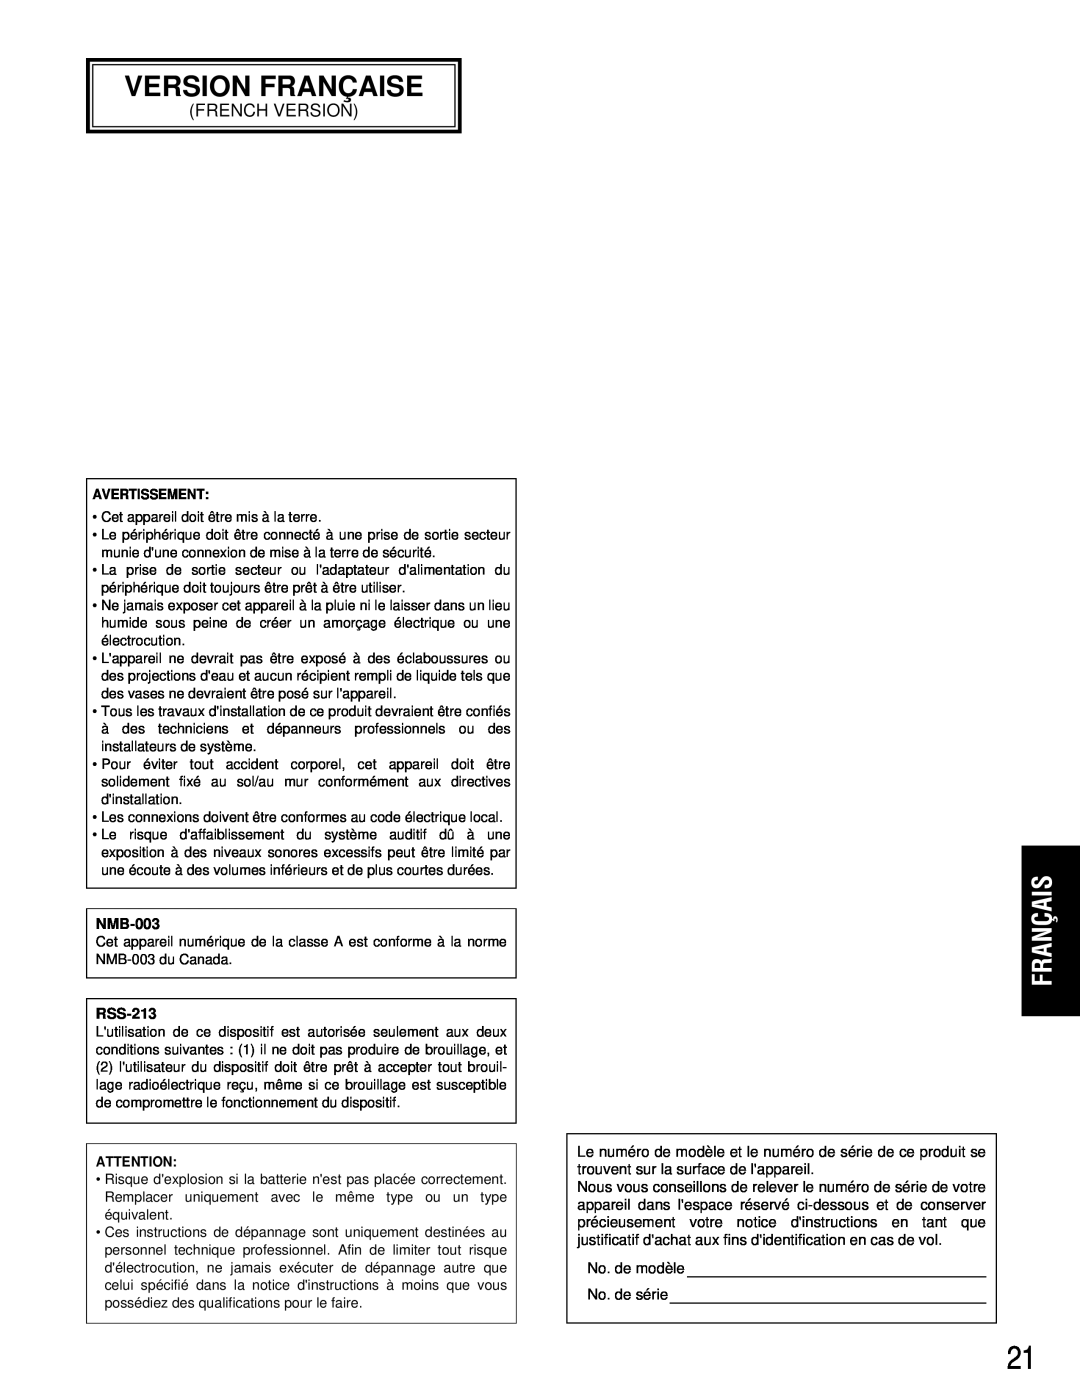 Technics WX-H3050 manual Version Française, French Version, Avertissement, NMB-003, RSS-213 